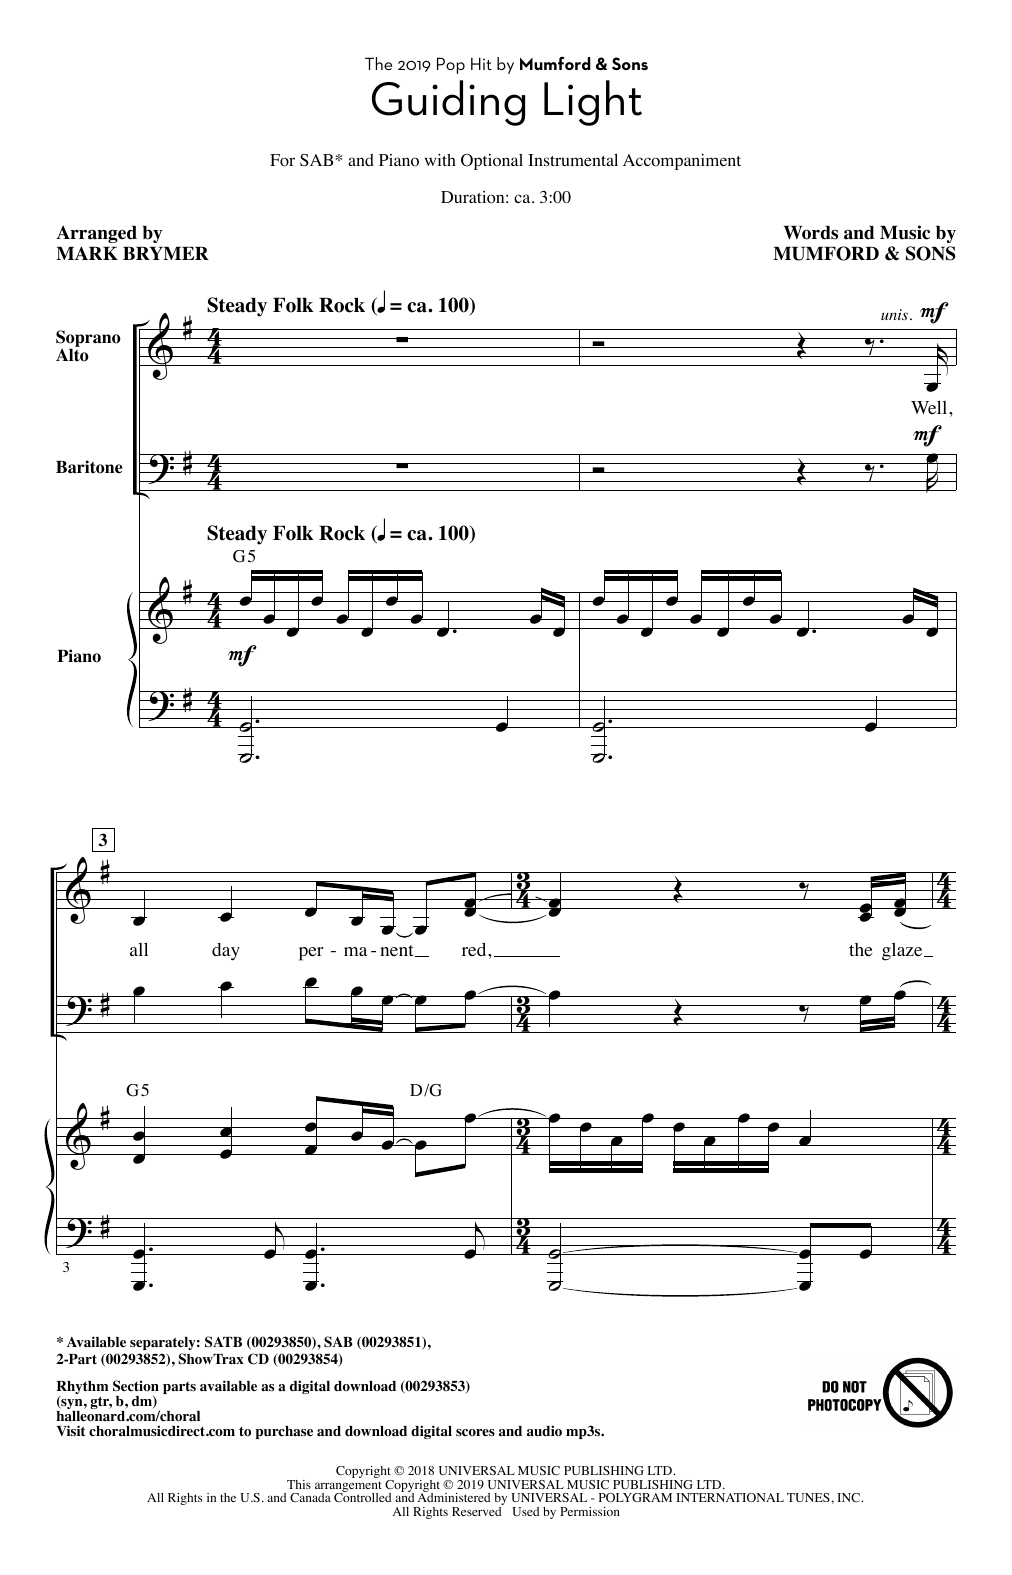 Mumford & Sons Guiding Light (arr. Mark Brymer) Sheet Music Notes & Chords for SAB Choir - Download or Print PDF